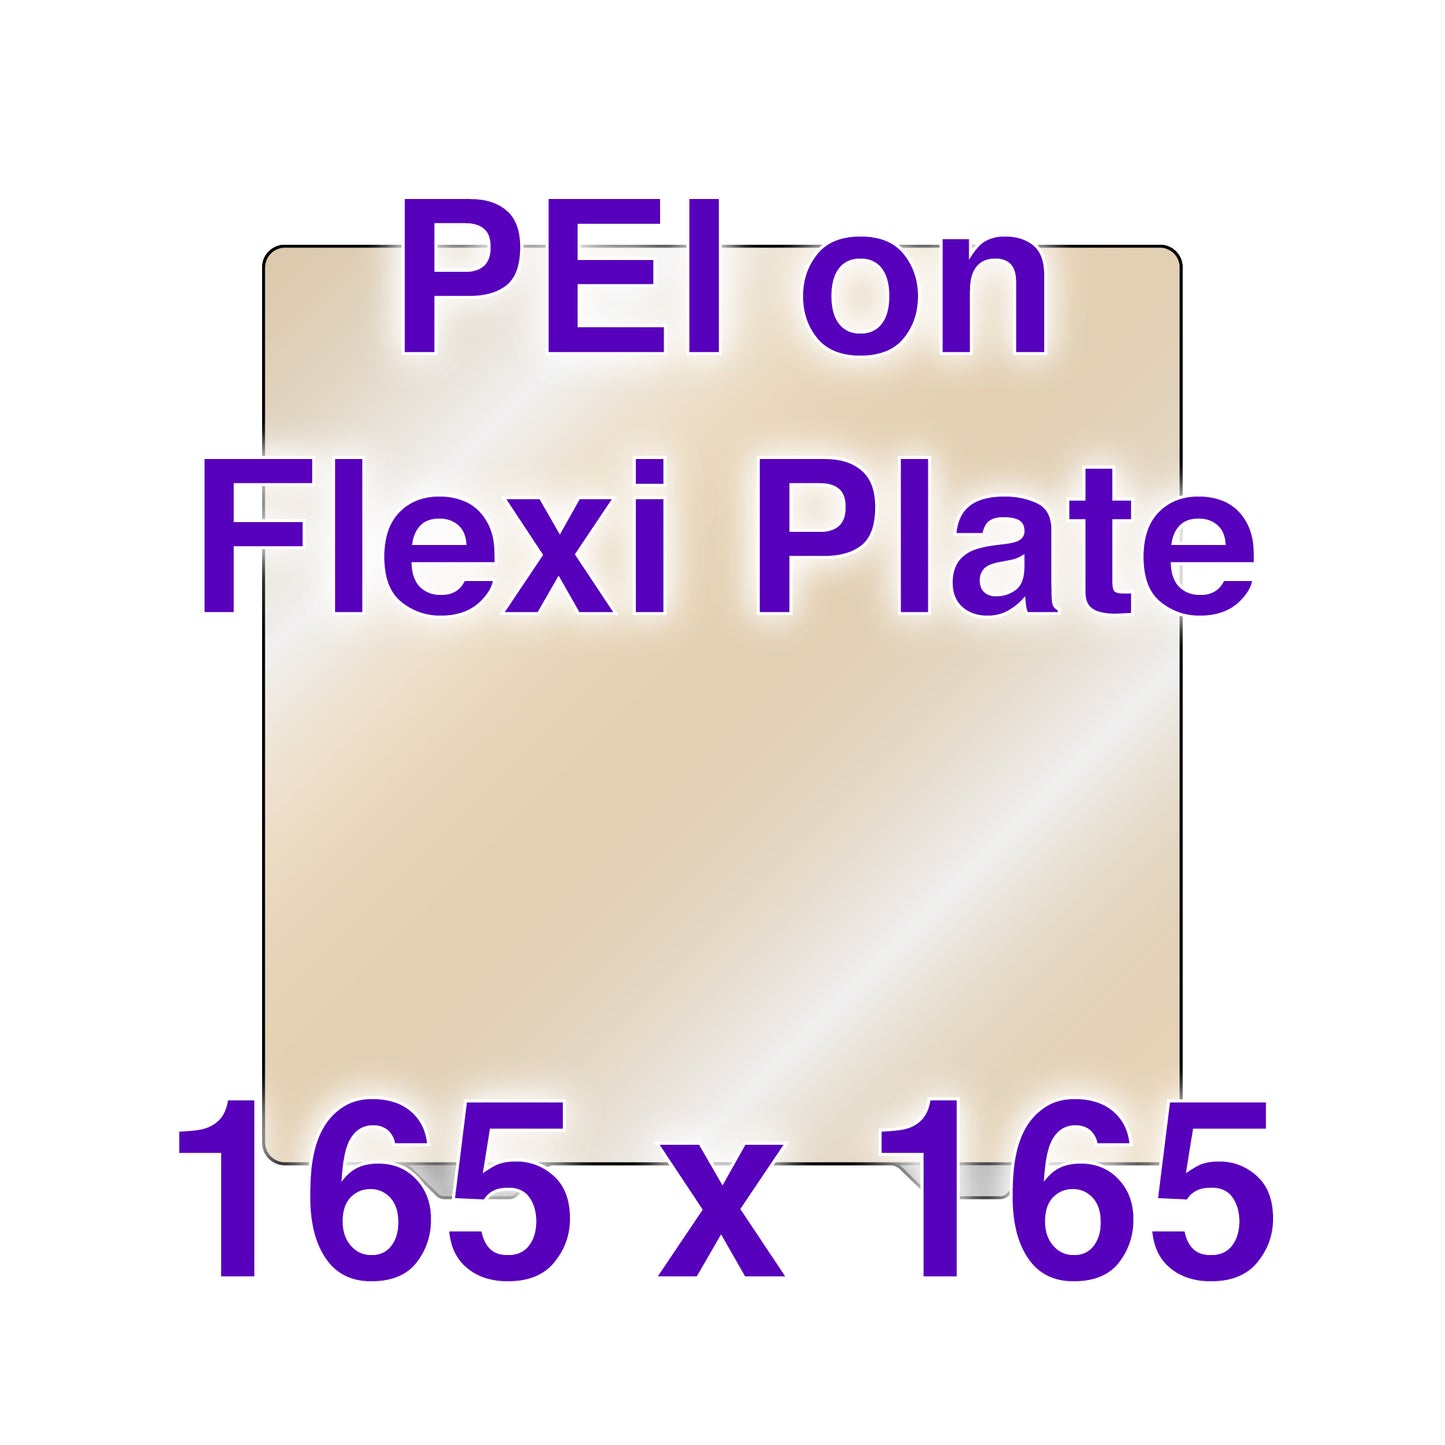 Flexi Plate with PEI - Creality Ender 2 Pro - 165 x 165